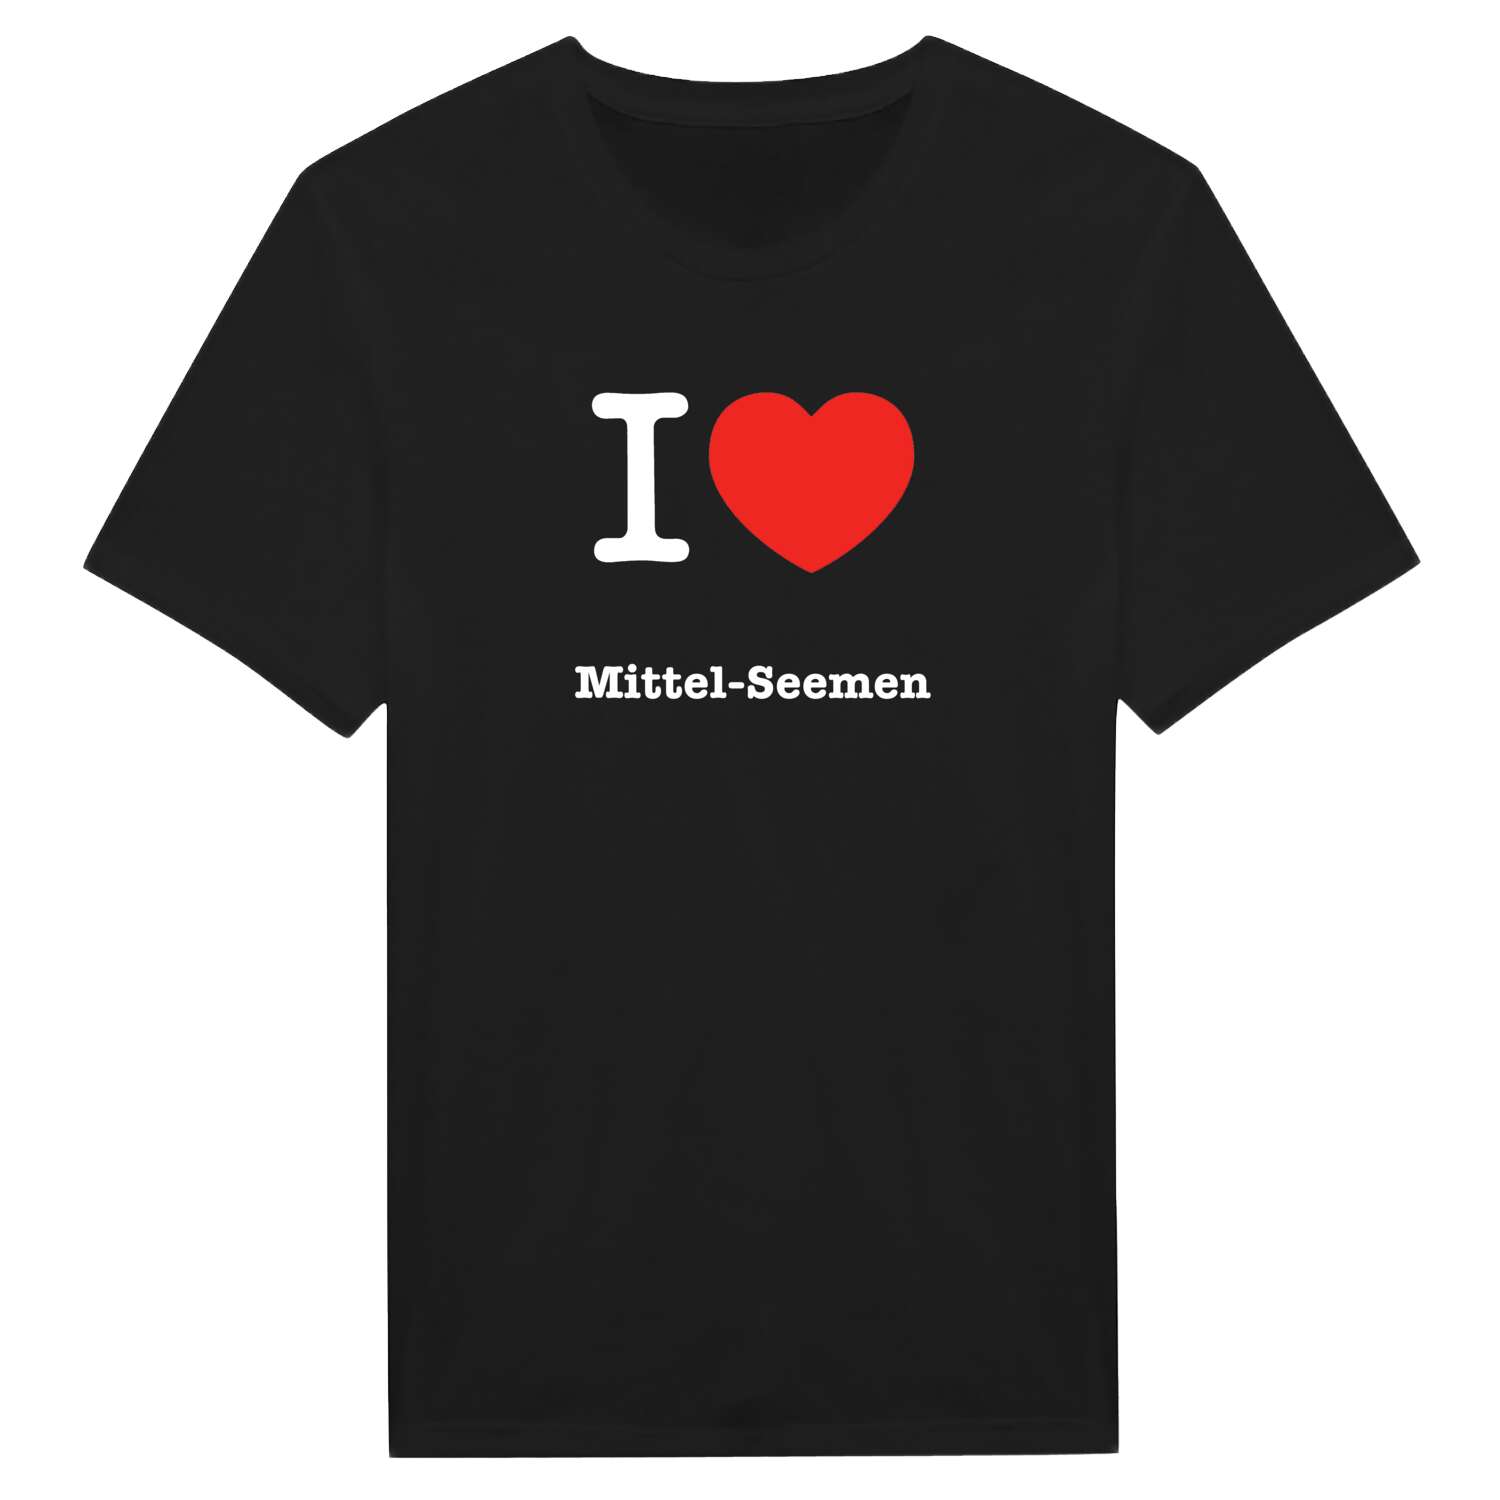 Mittel-Seemen T-Shirt »I love«